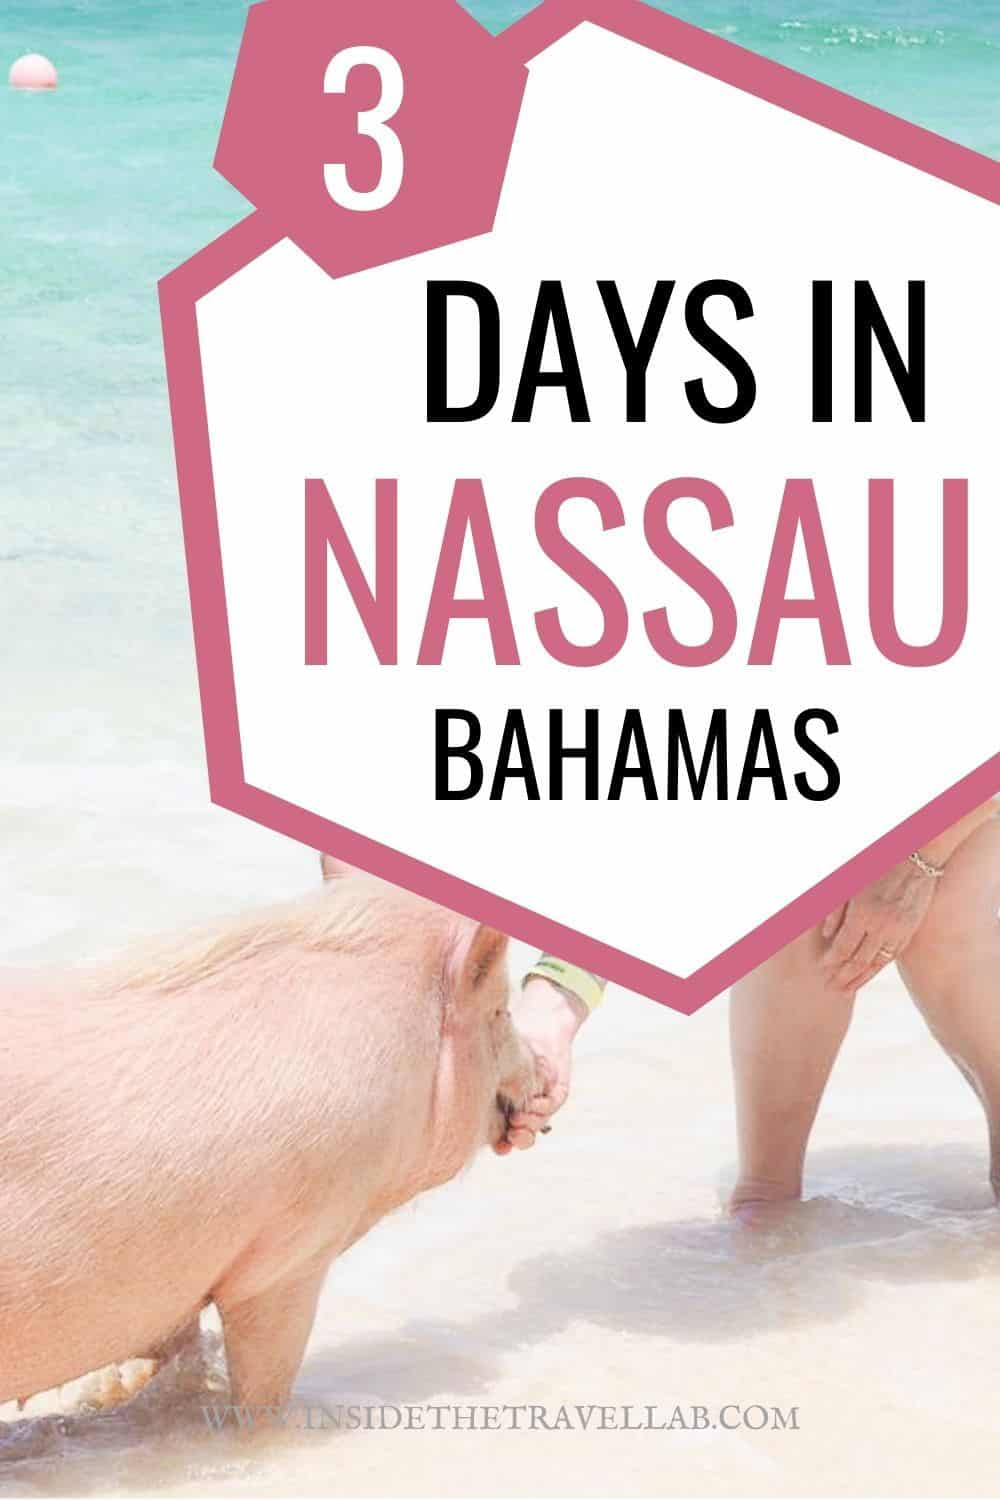 Nassau Bahamas 3 Day Itinerary Cover Image